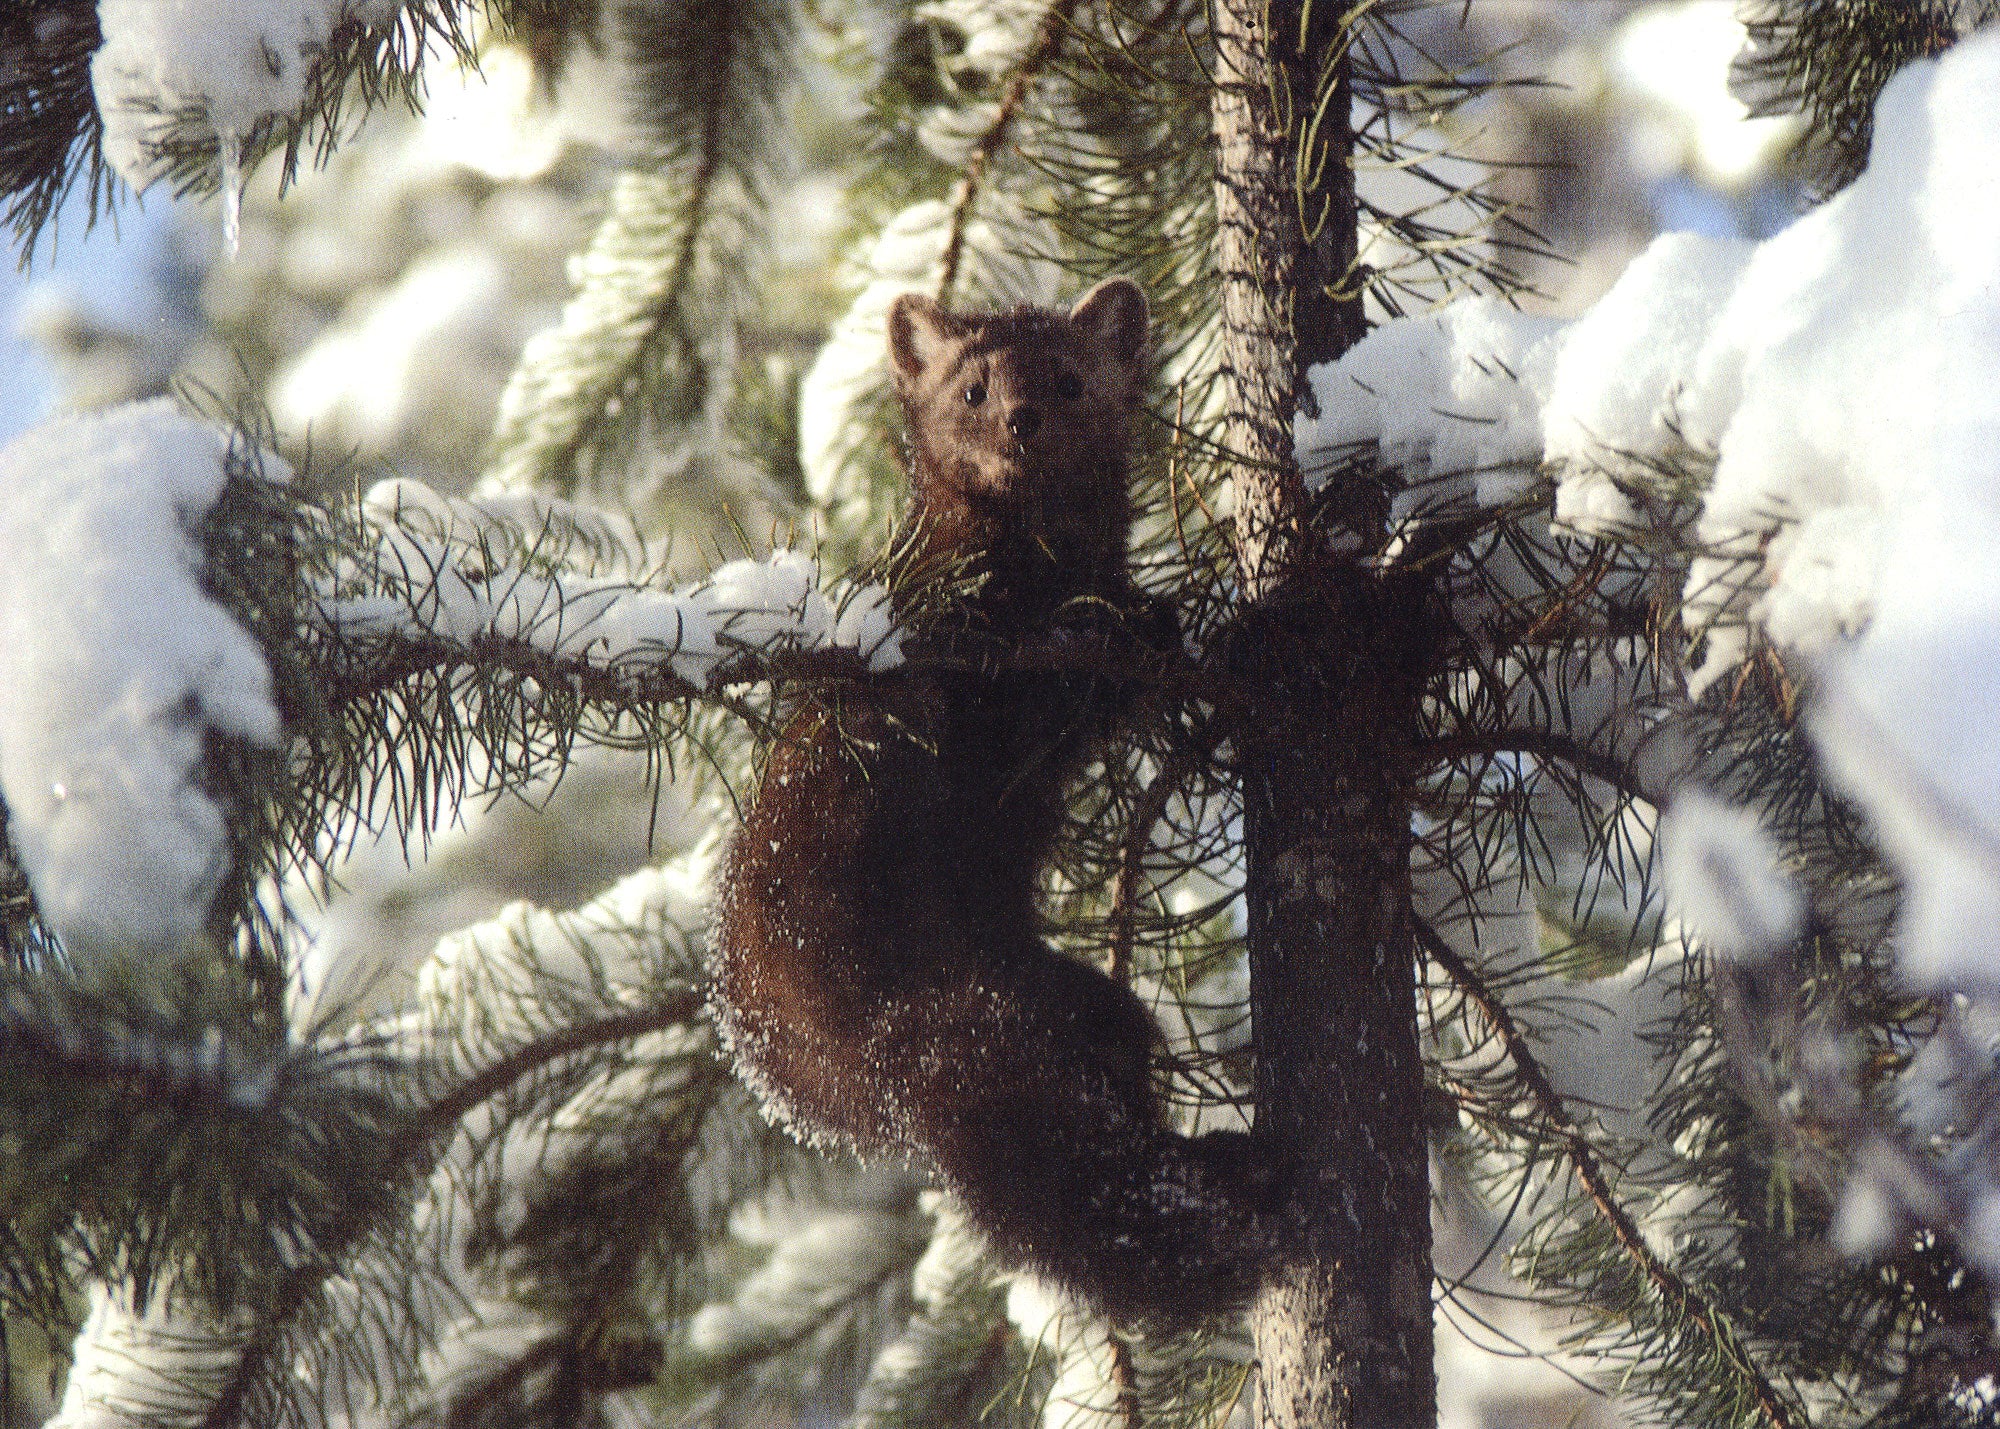 A pine marten climbing up a snowy tree. End of image description.